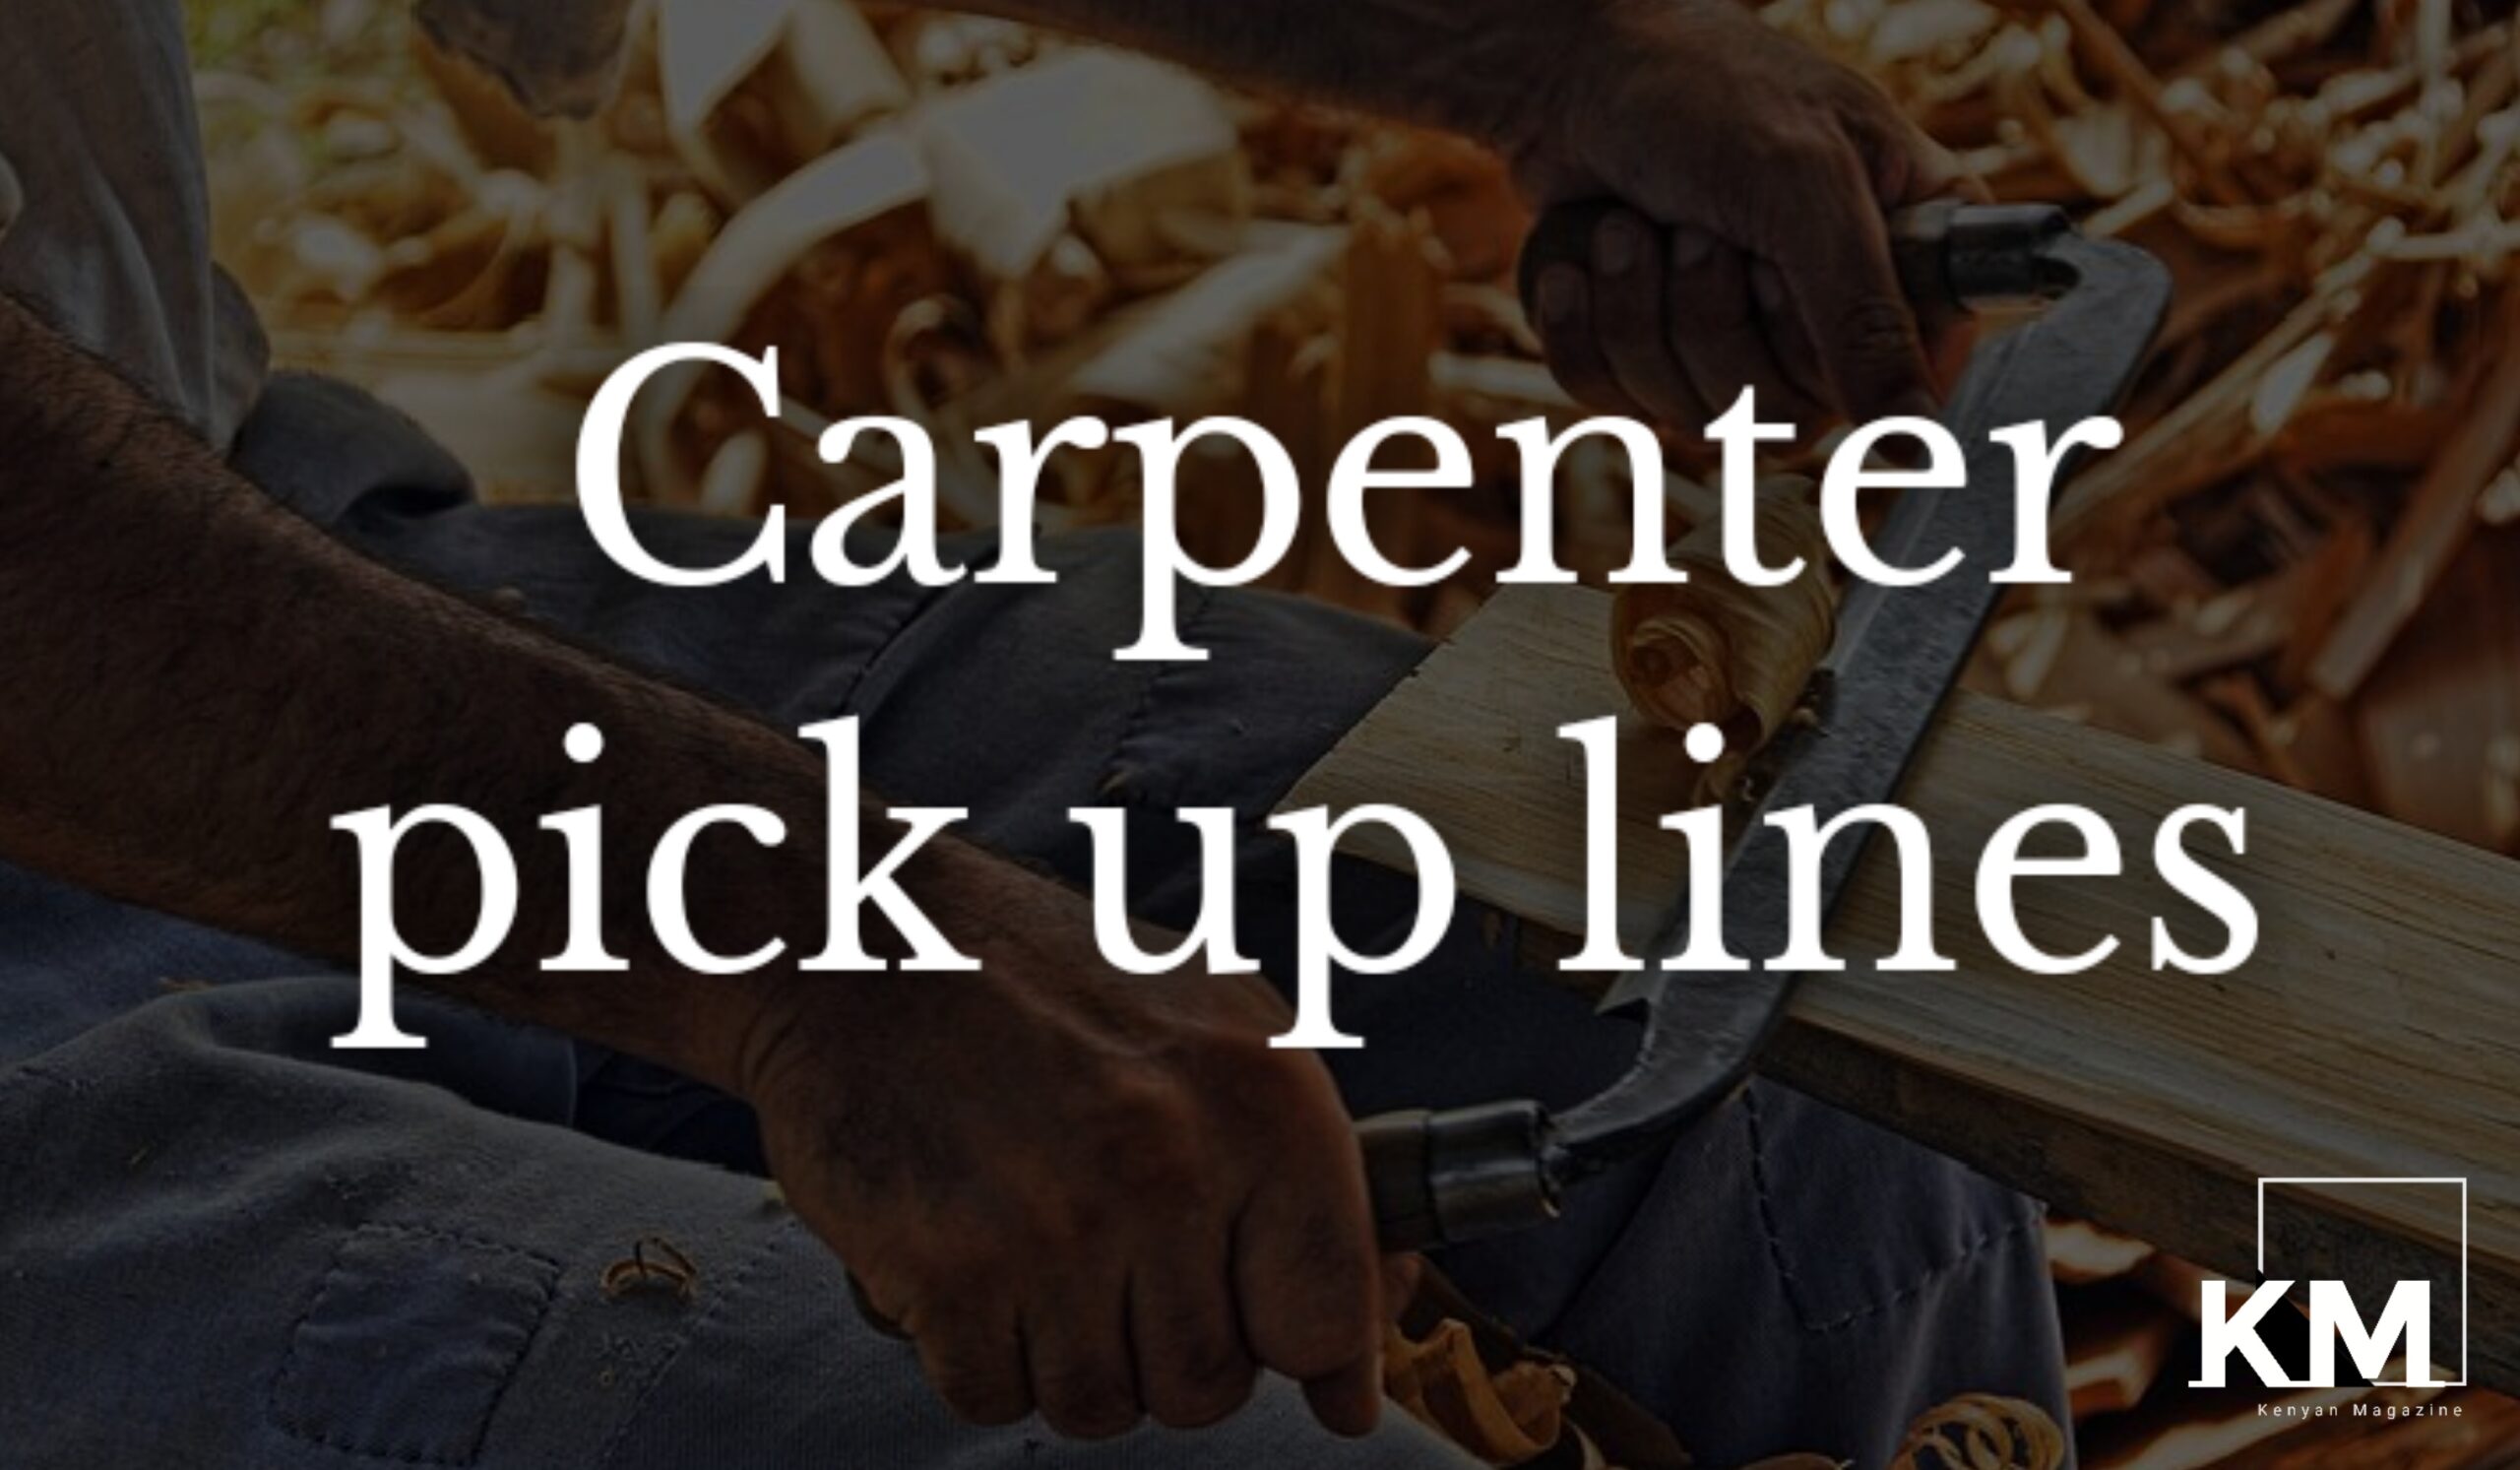 Carpenter pick up lines